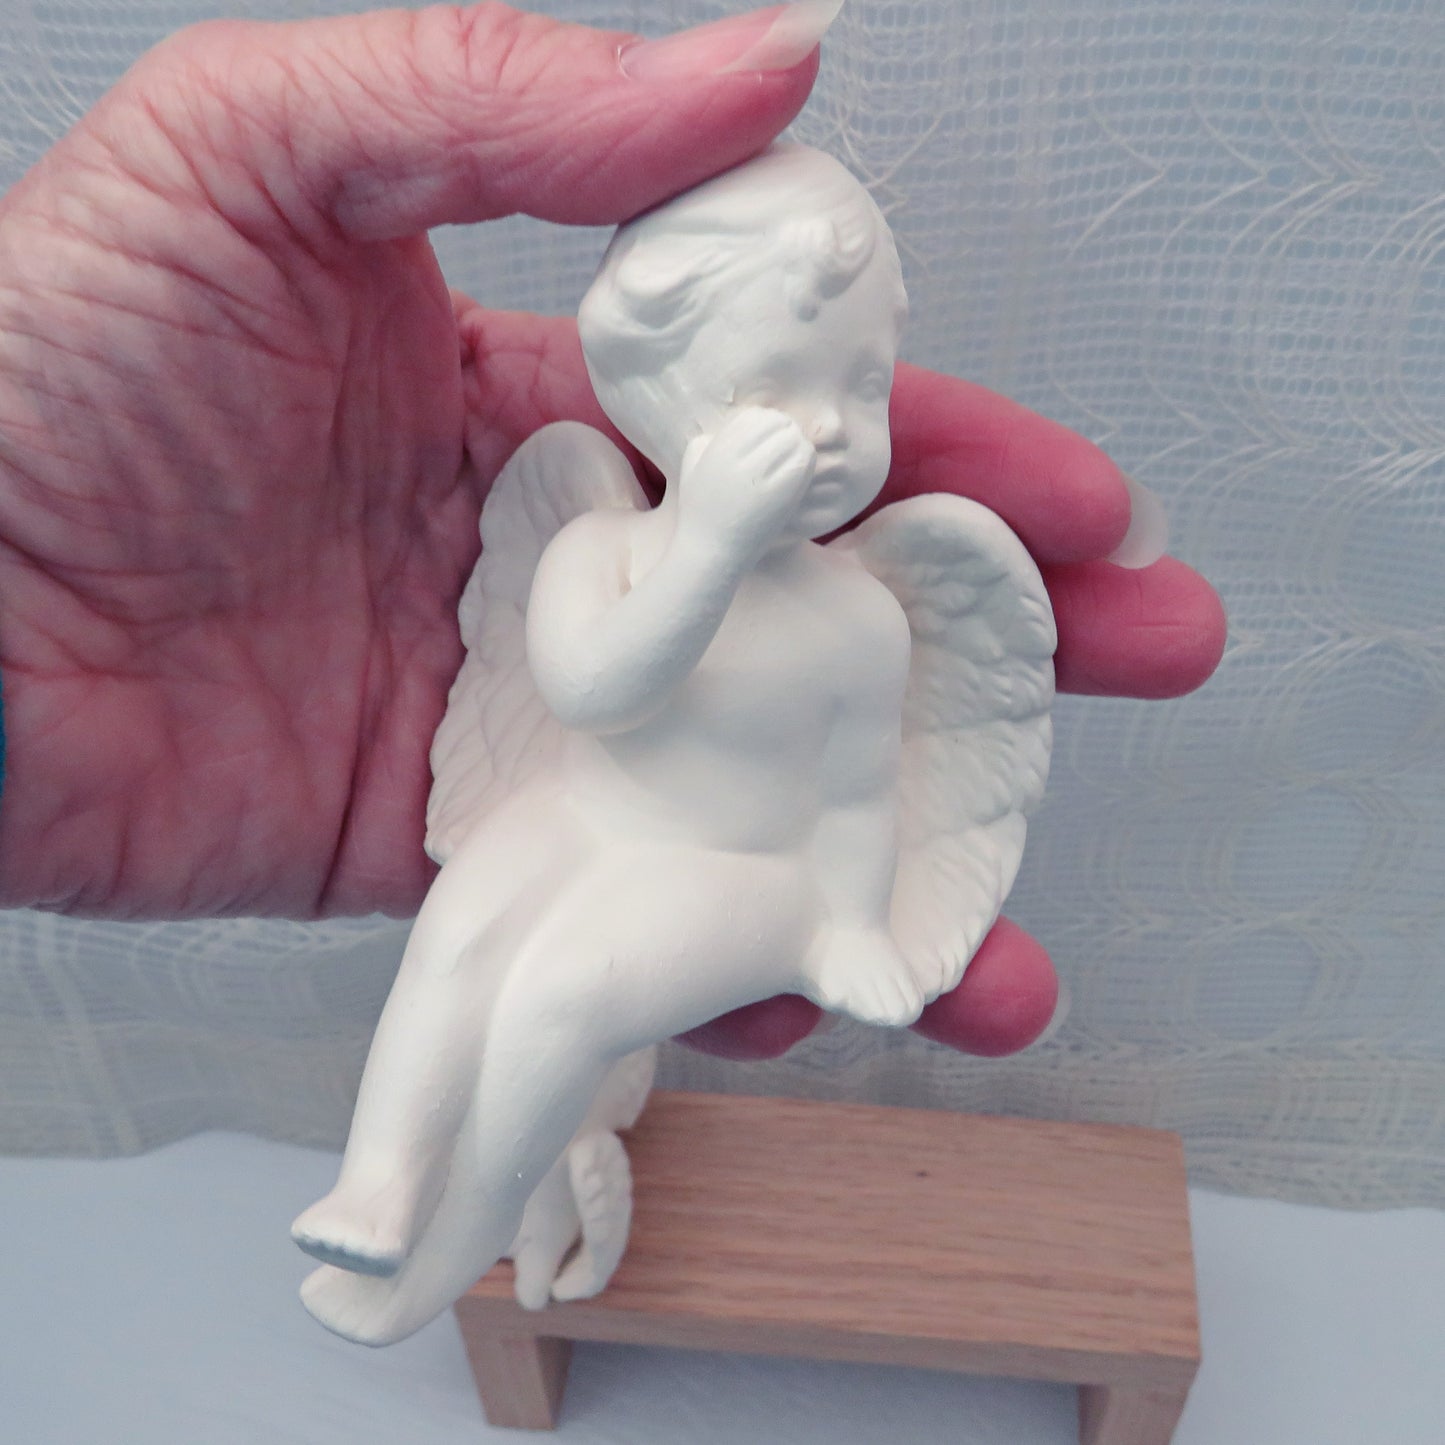 Handmade Paintable Ceramic Cherub Figuines, Set of 2 Ready to Paint Ceramic Cherub Angel Statues, Cherub Statues Telling Secrets te